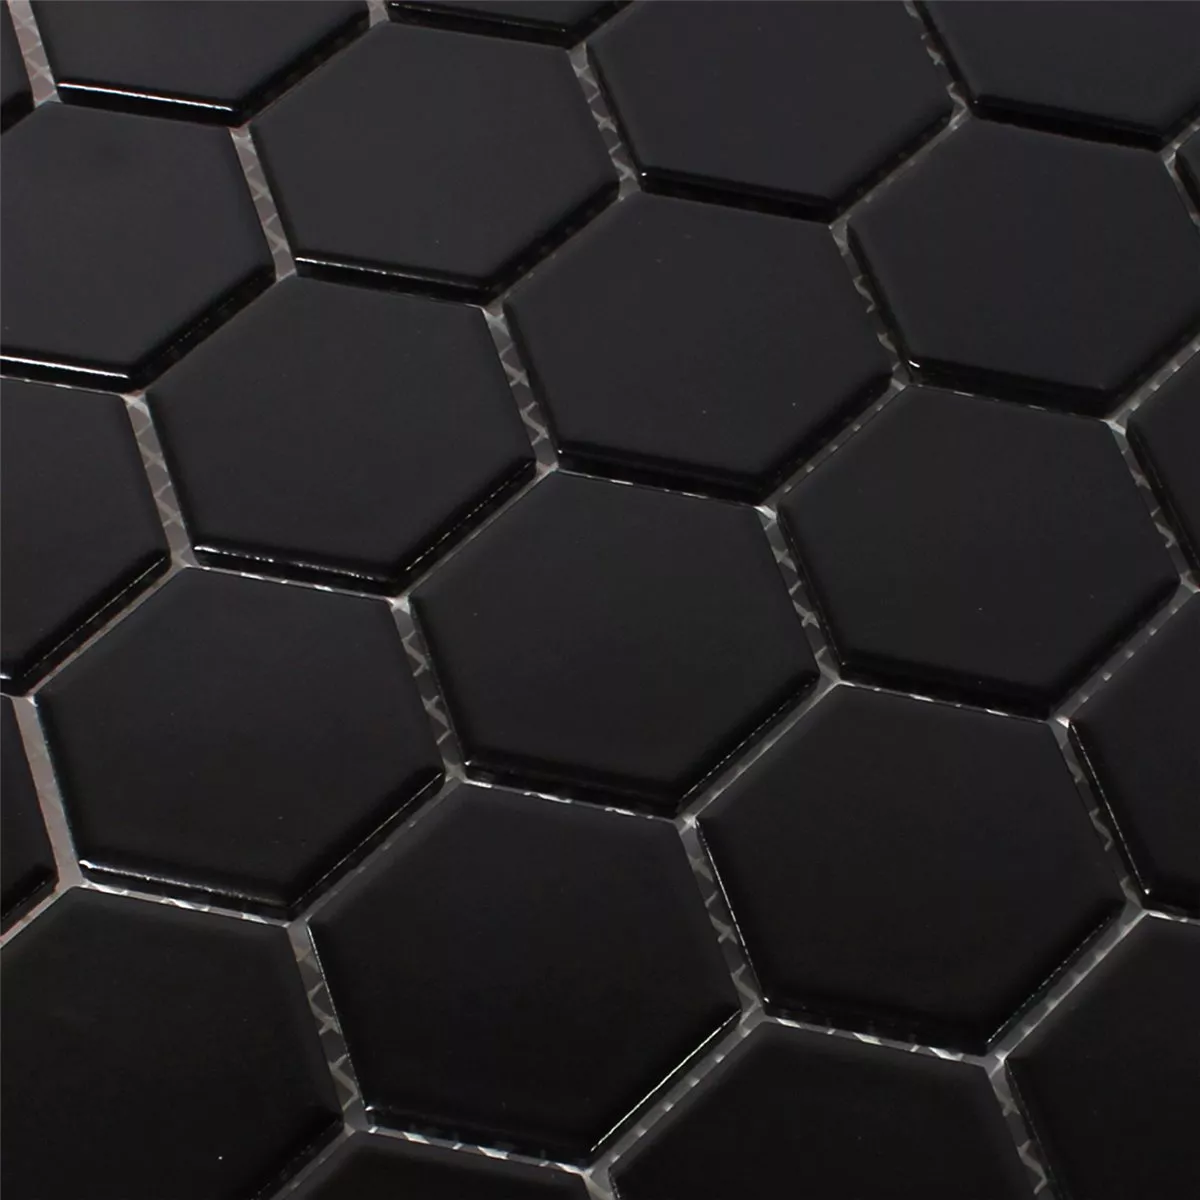 Sample Mosaic Tiles Ceramic Hexagon Black Mat